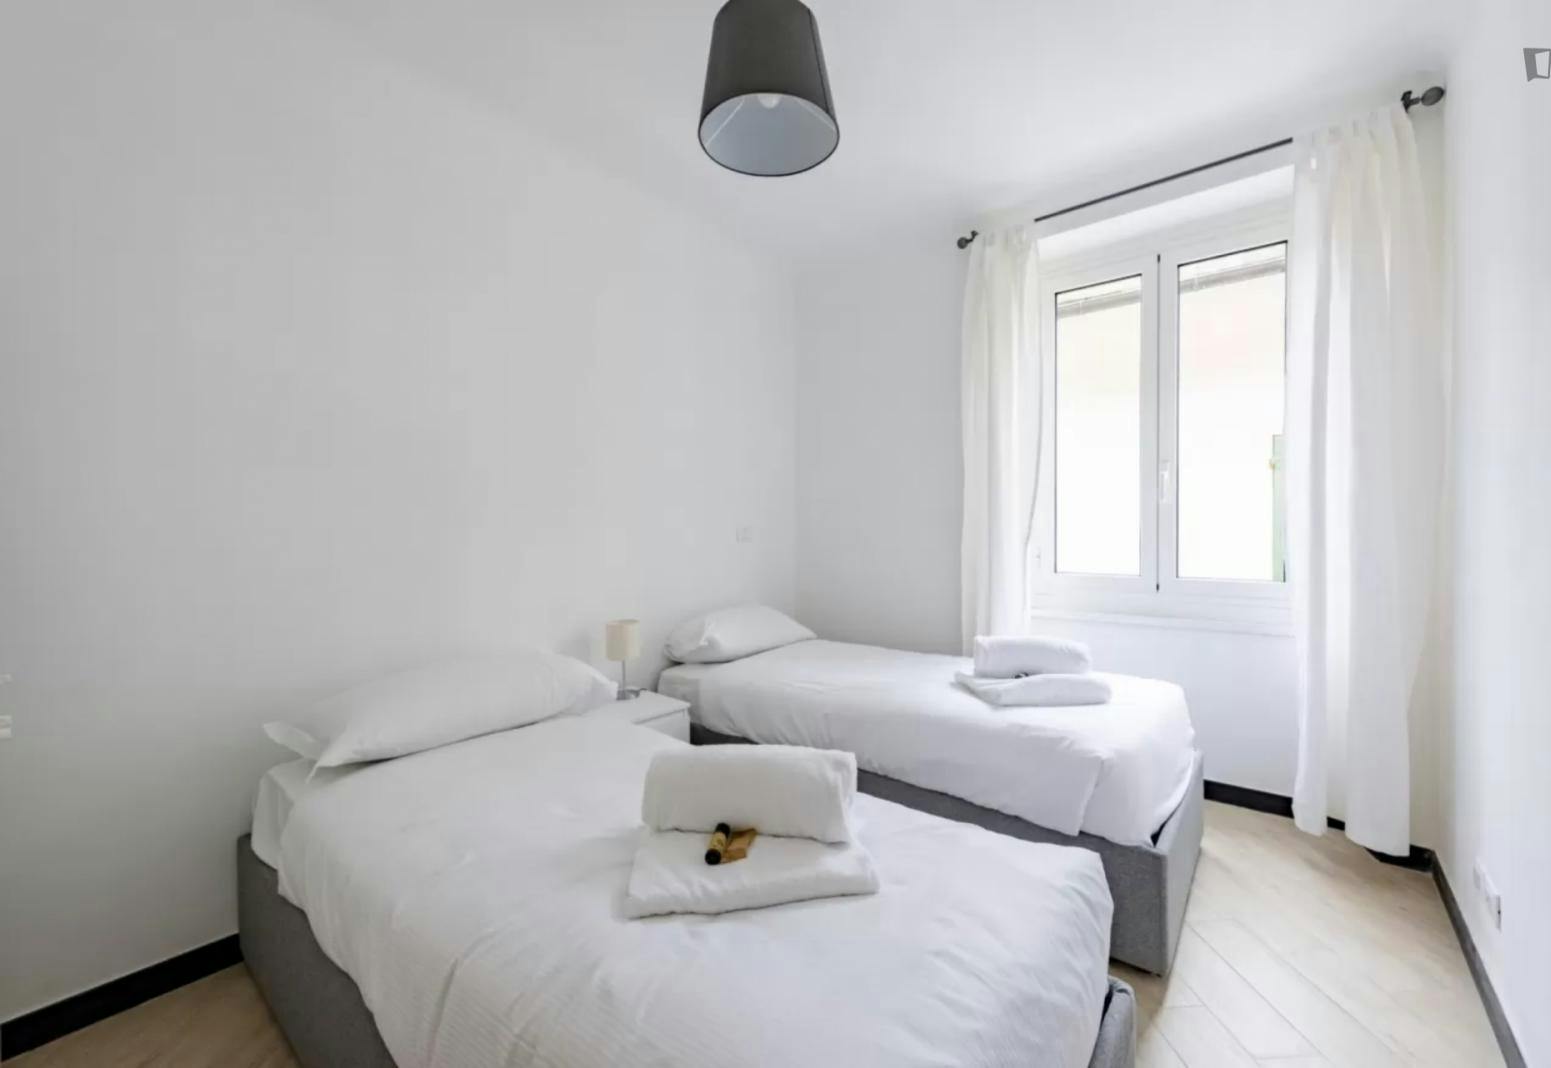 Large 2-bedroom apartment near the De Ferrari metro